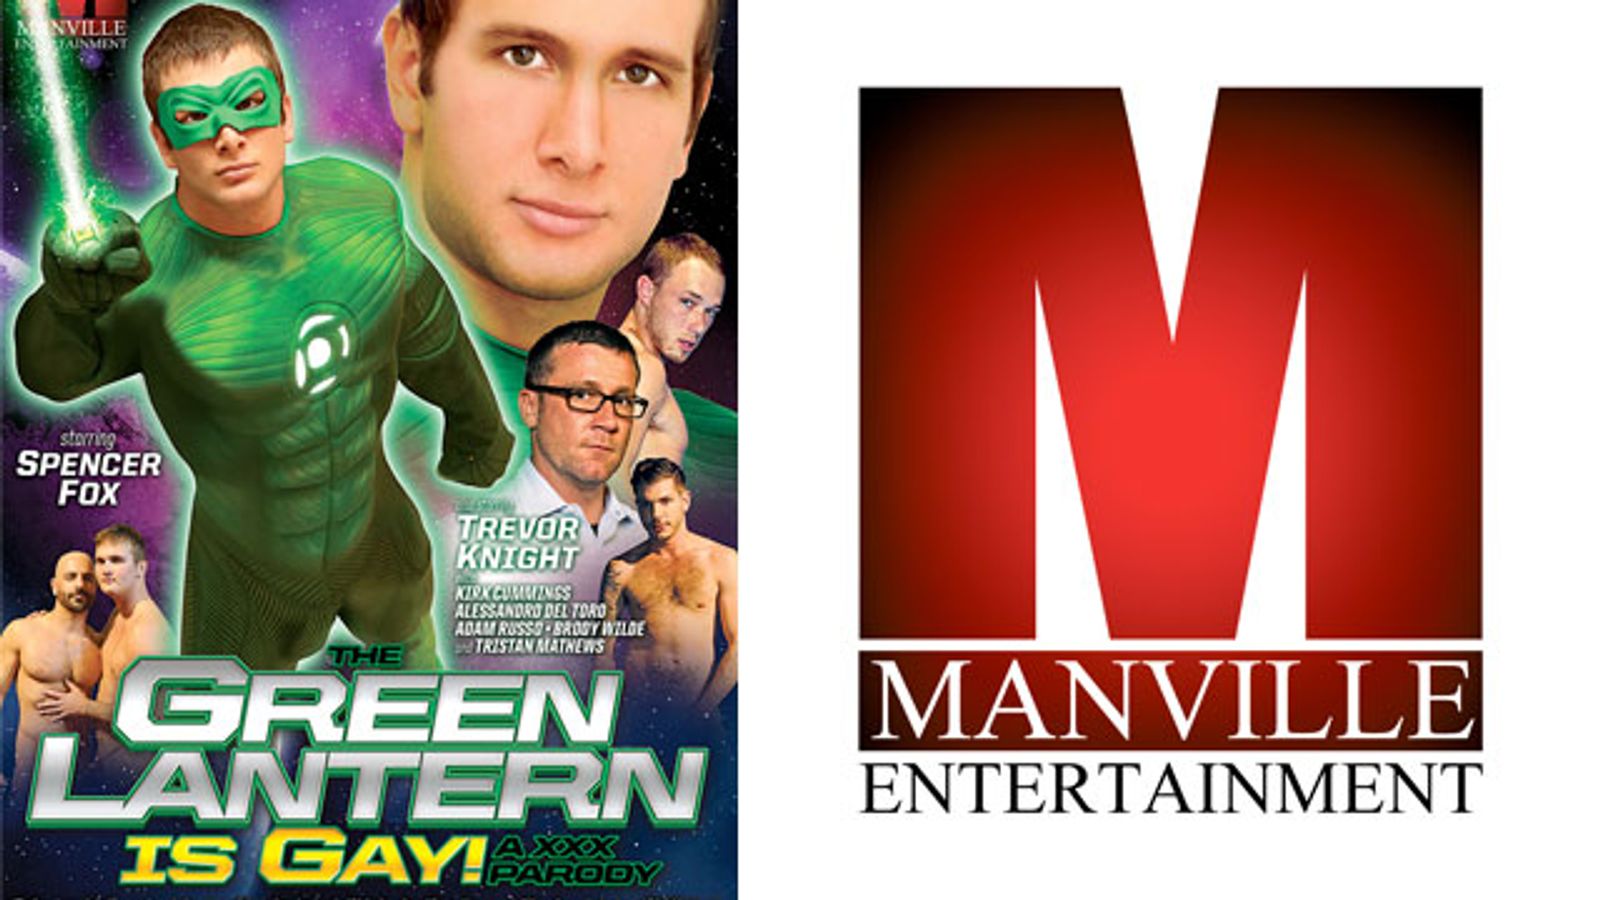 Manville Entertainment to Street 'Green Lantern' Spoof in November